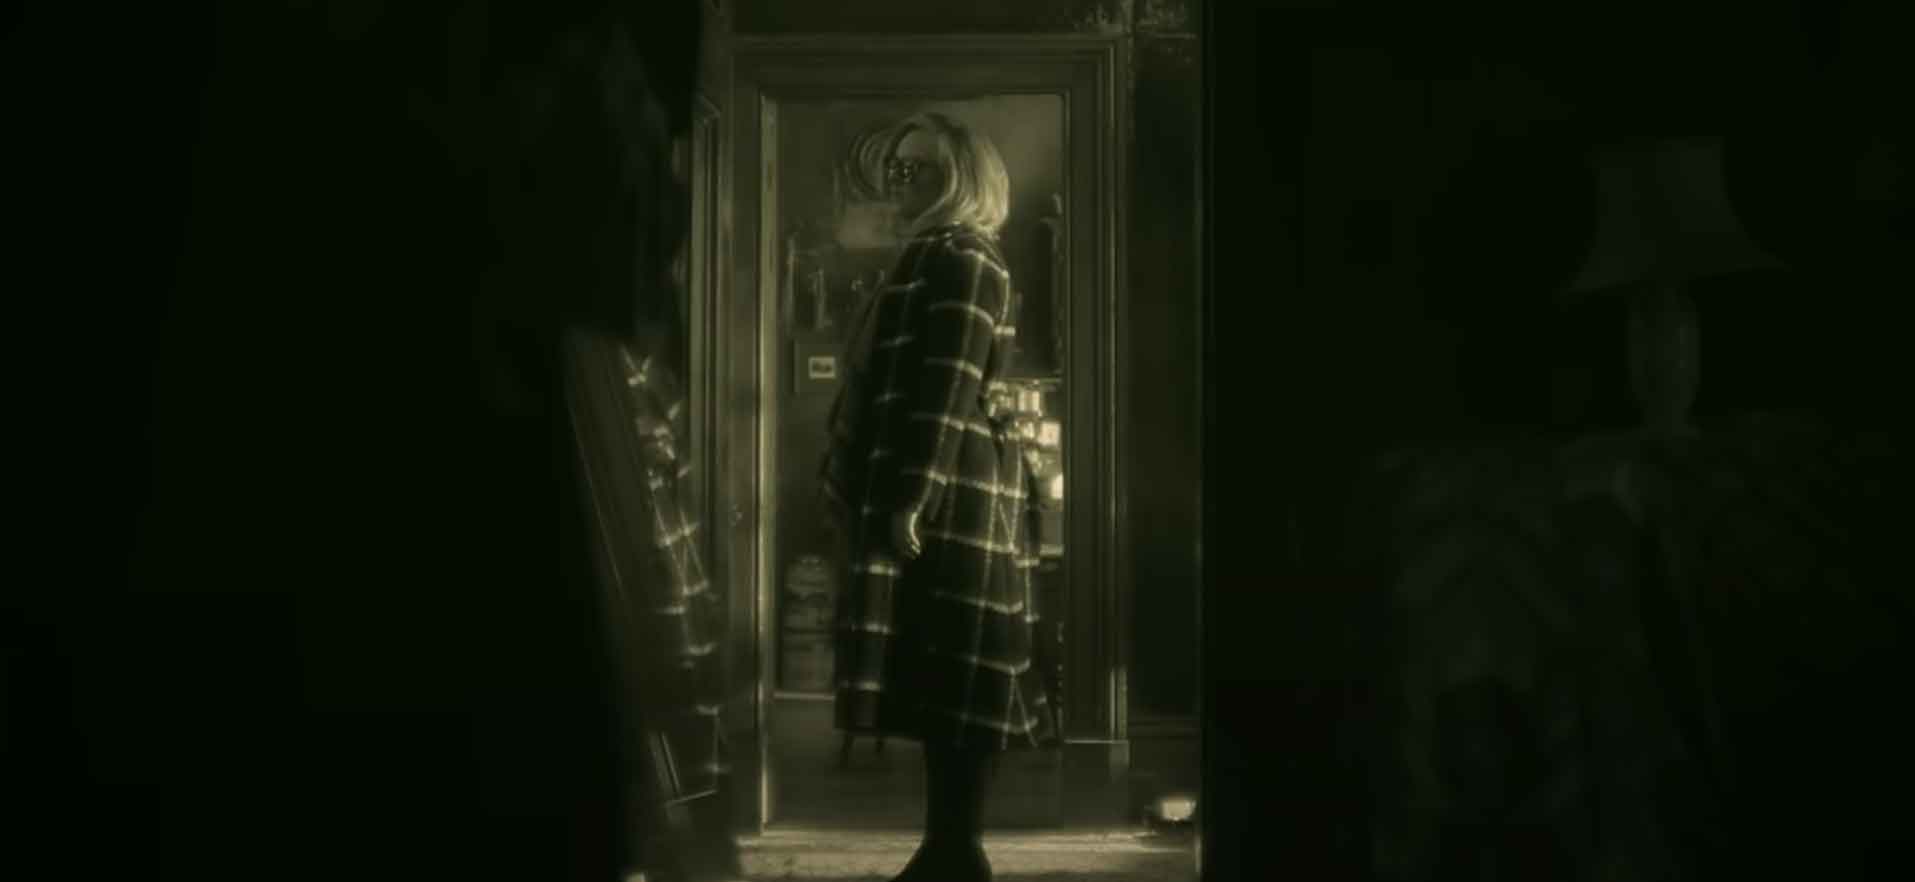 Adele entering the house in 'Hello' MV